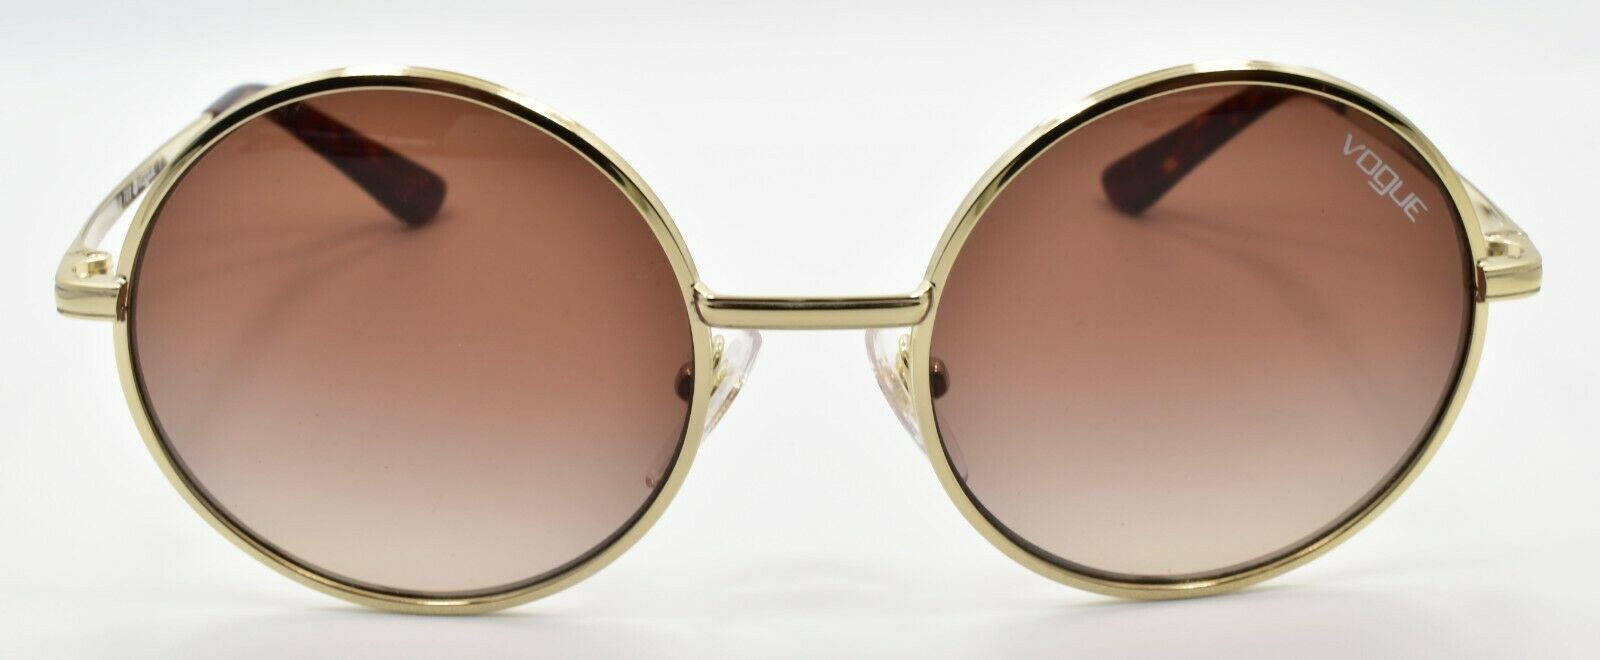 2-Vogue x Gigi Hadid VO4085S 848/13 Women's Sunglasses Light Gold / Brown Gradient-8053672863291-IKSpecs